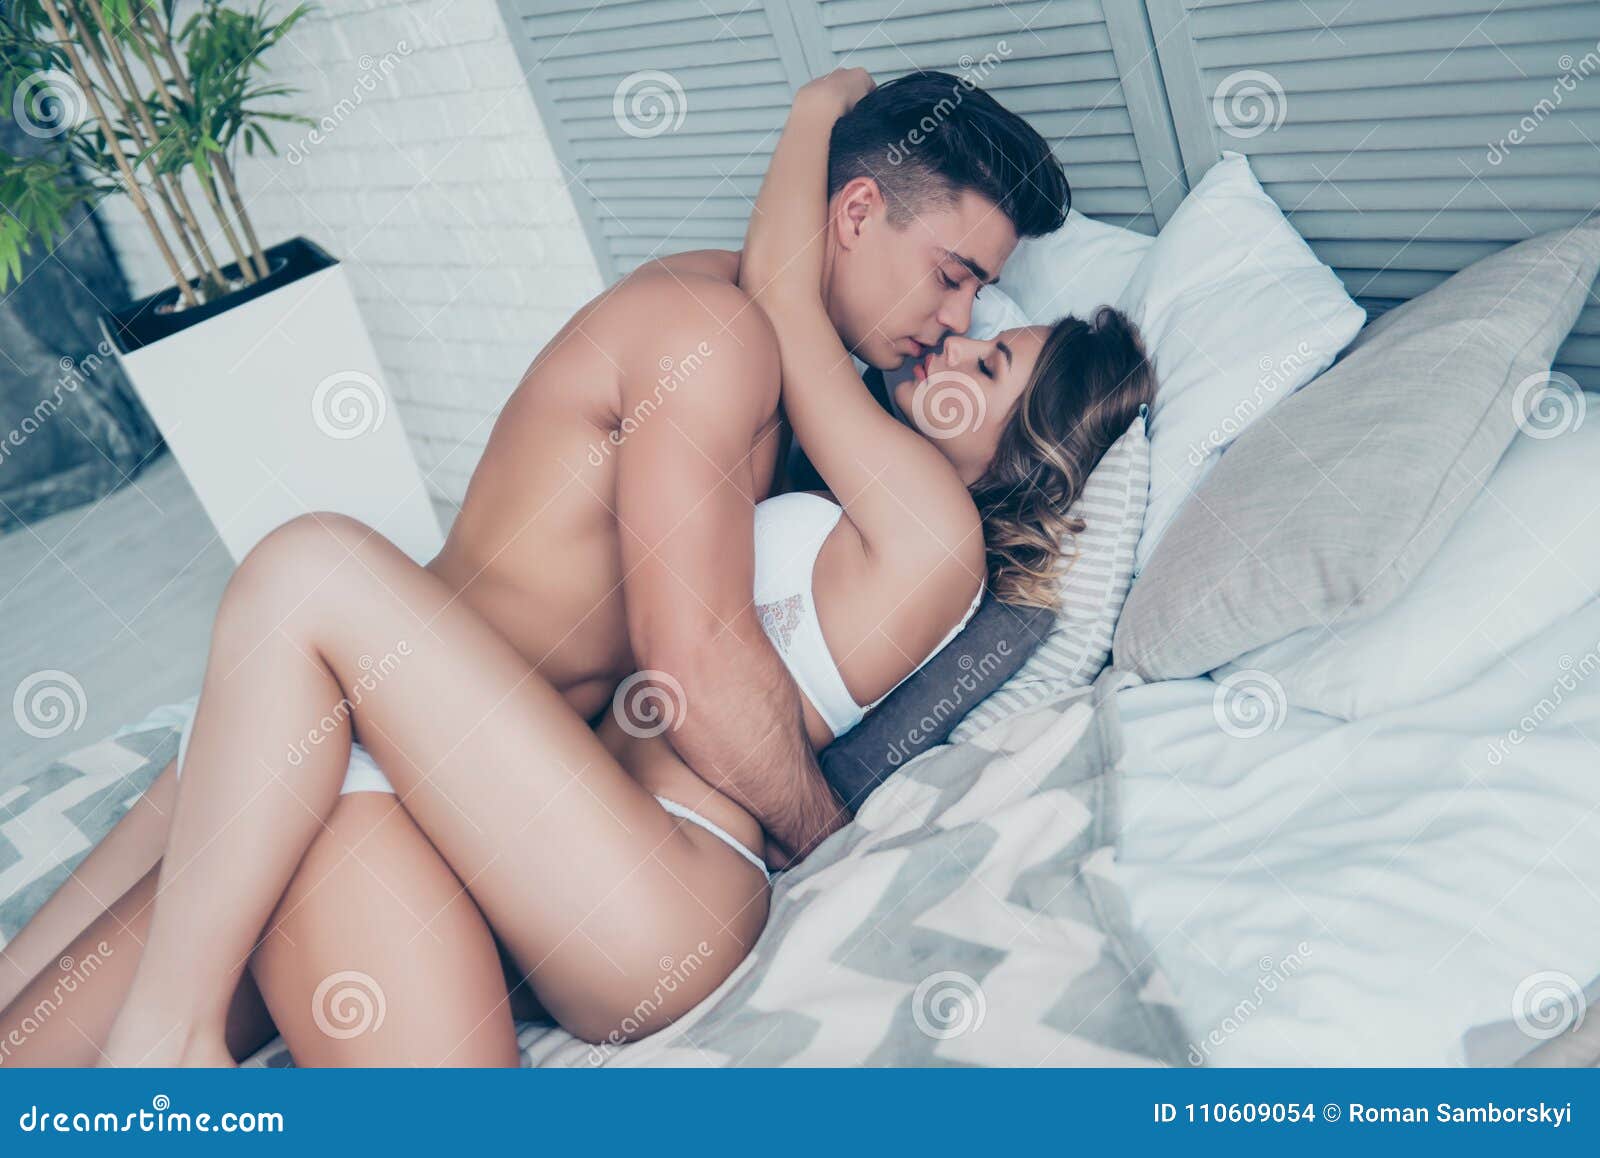 bosy ibrahem add photo hot naked couple sex